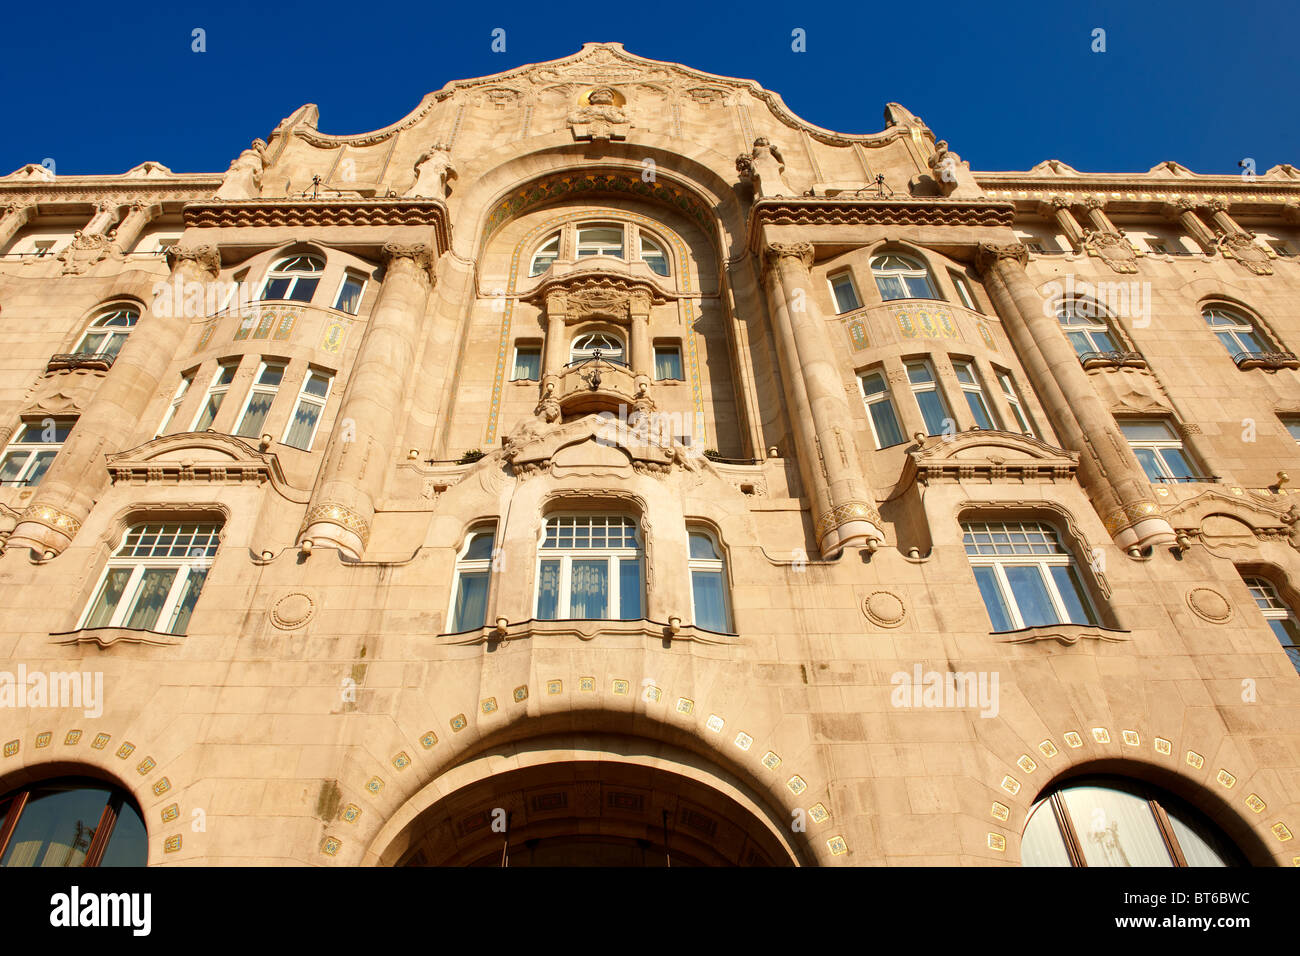 Four Seasons Hotel in The Art Nouveau Gresham Palace, Budapest, Hungary Stock Photo